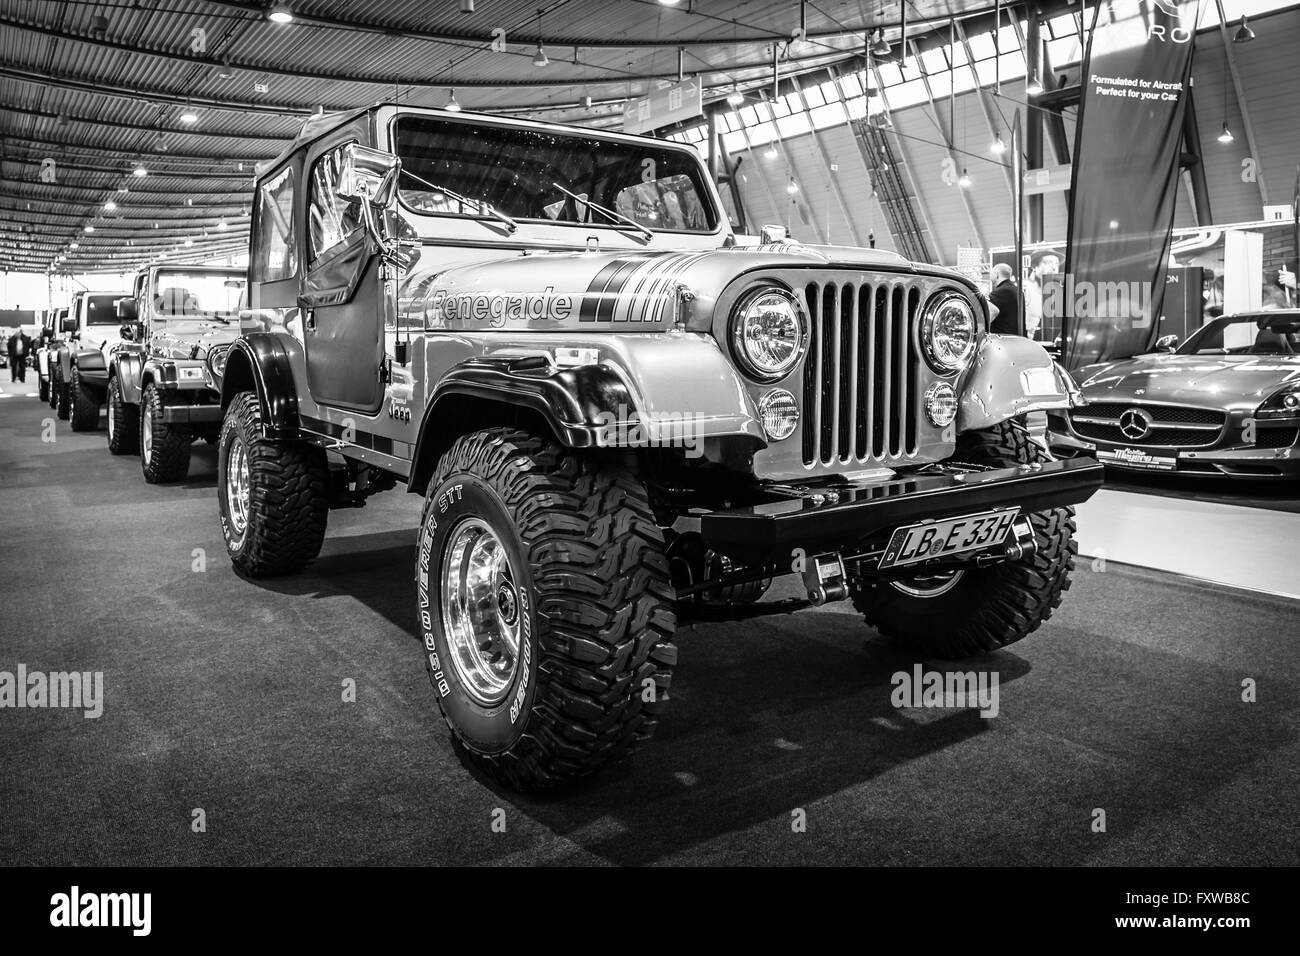 Jeep wrangler Black and White Stock Photos & Images - Alamy